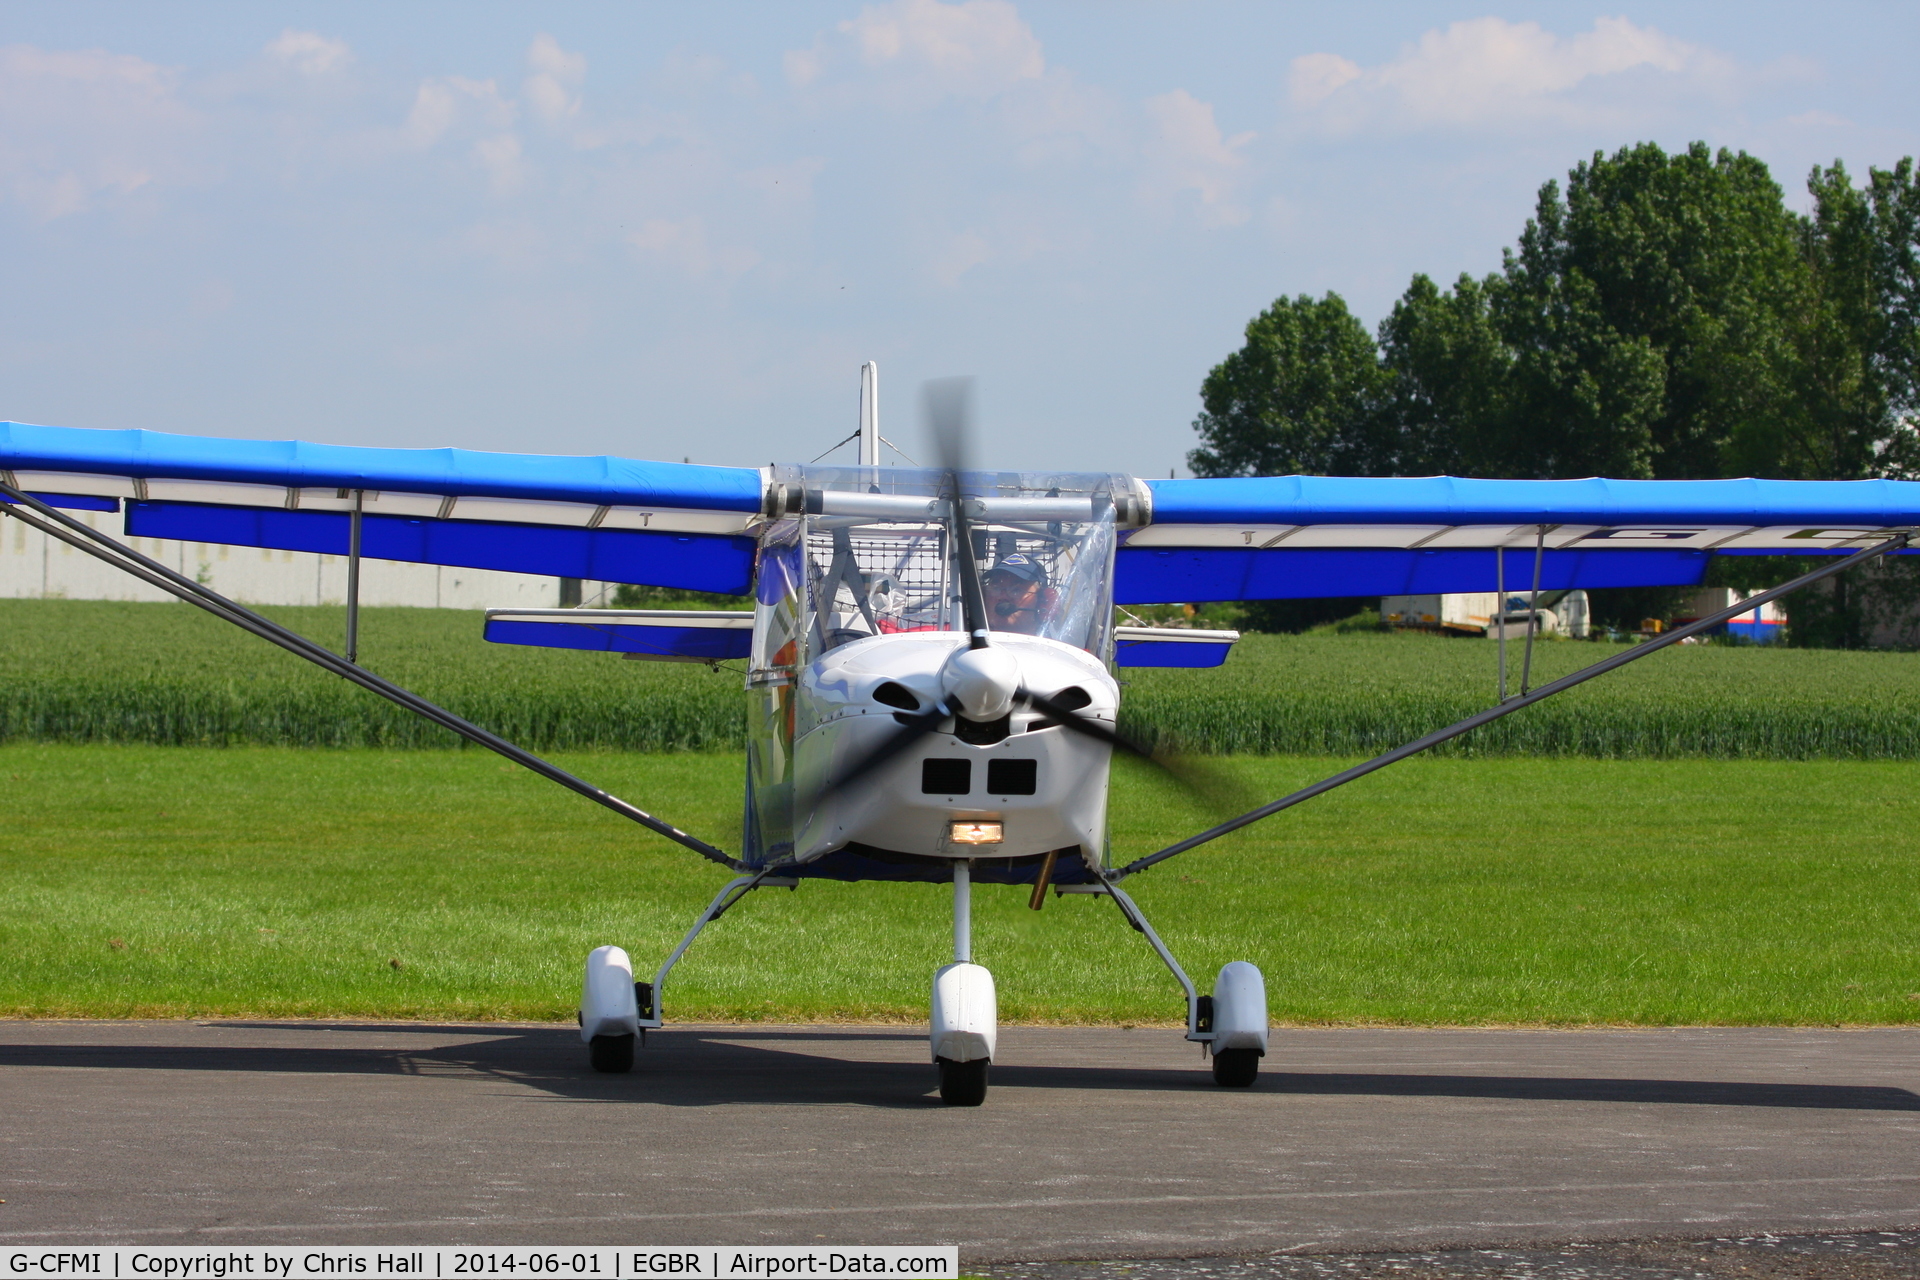 G-CFMI, 2008 Skyranger 912(1) C/N BMAA/HB/580, at Breighton's Open Cockpit & Biplane Fly-in, 2014